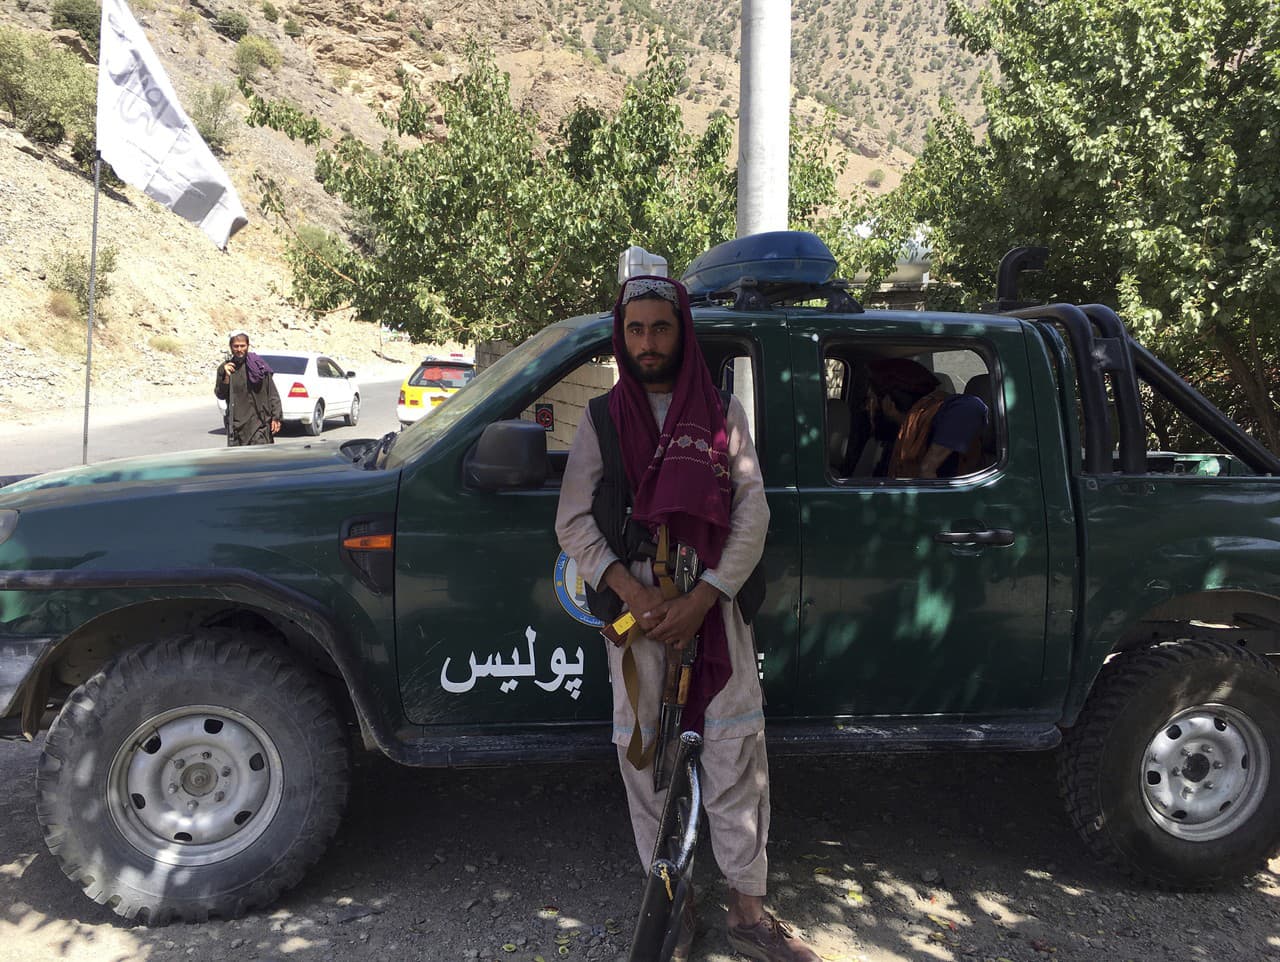 Bojovníci Talibanu 